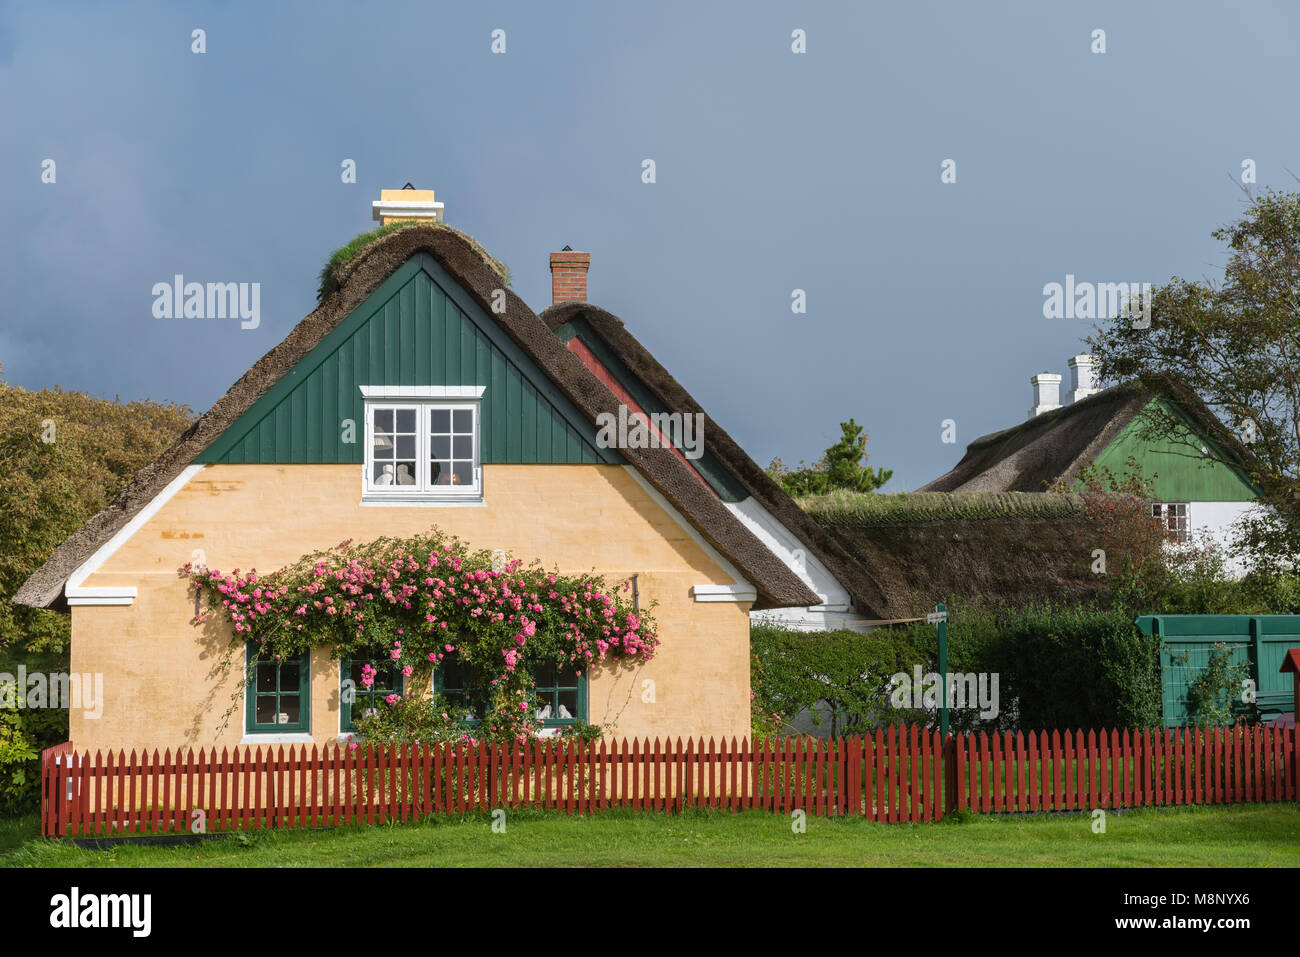 Tipica casa danese in Soenderho, isola di Fanoe, nello Jutland, Danimarca Foto Stock